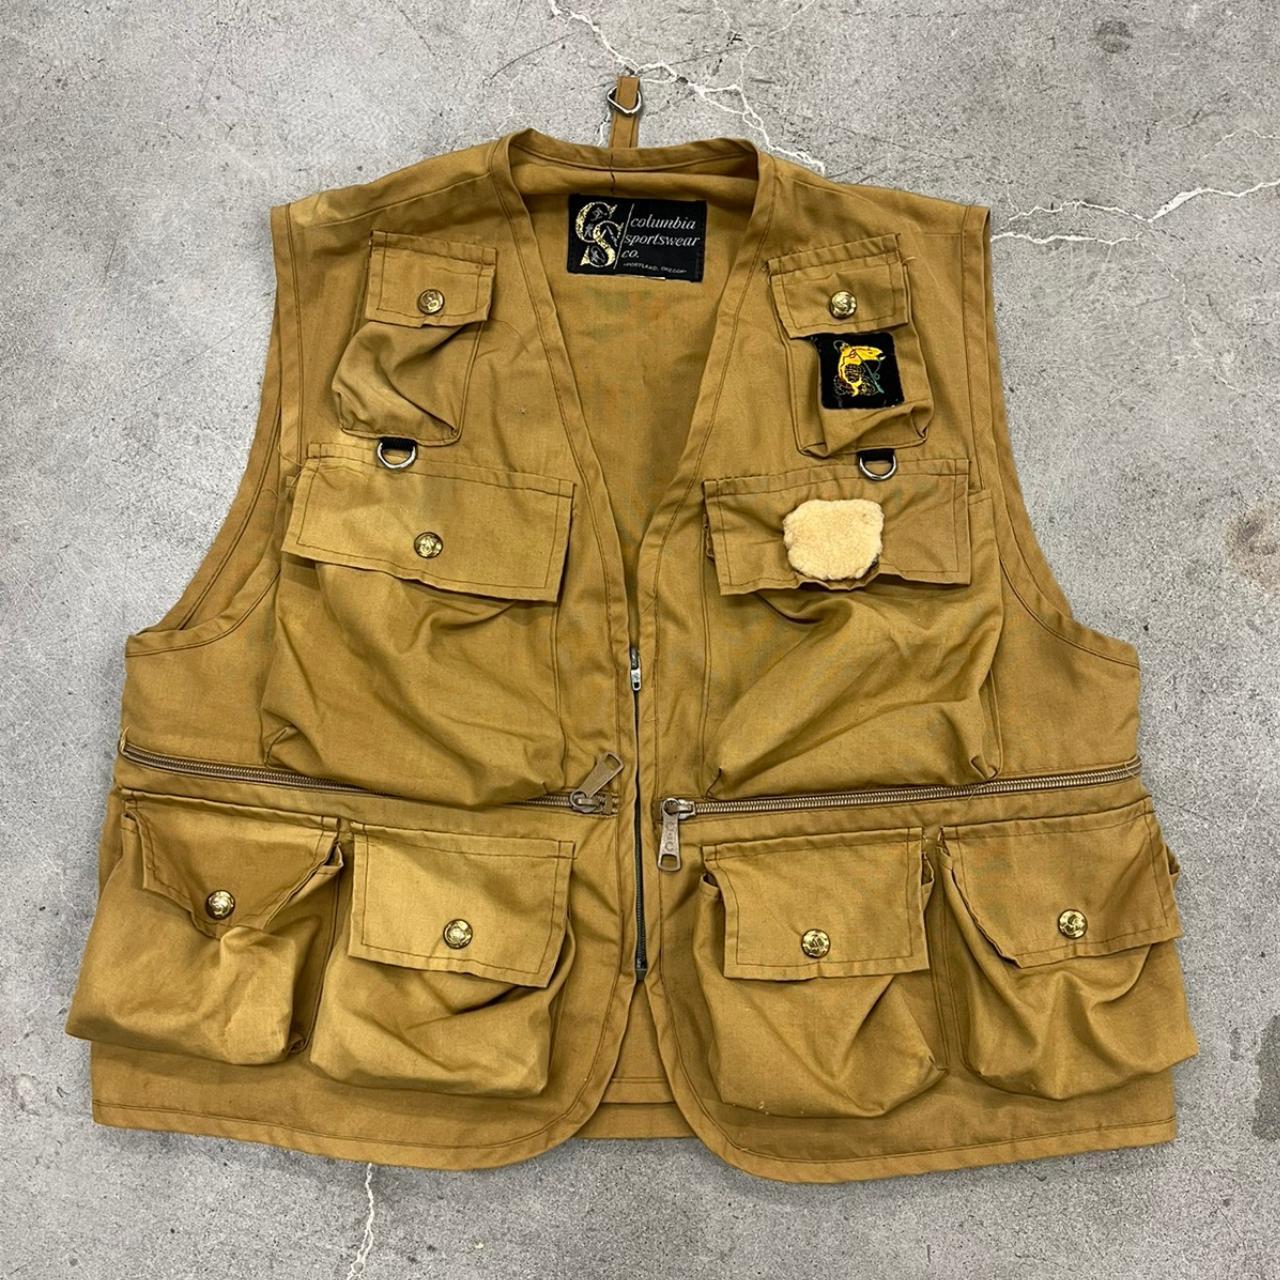 Vintage 80s Columbia Sportswear Safari Vest - Size Large